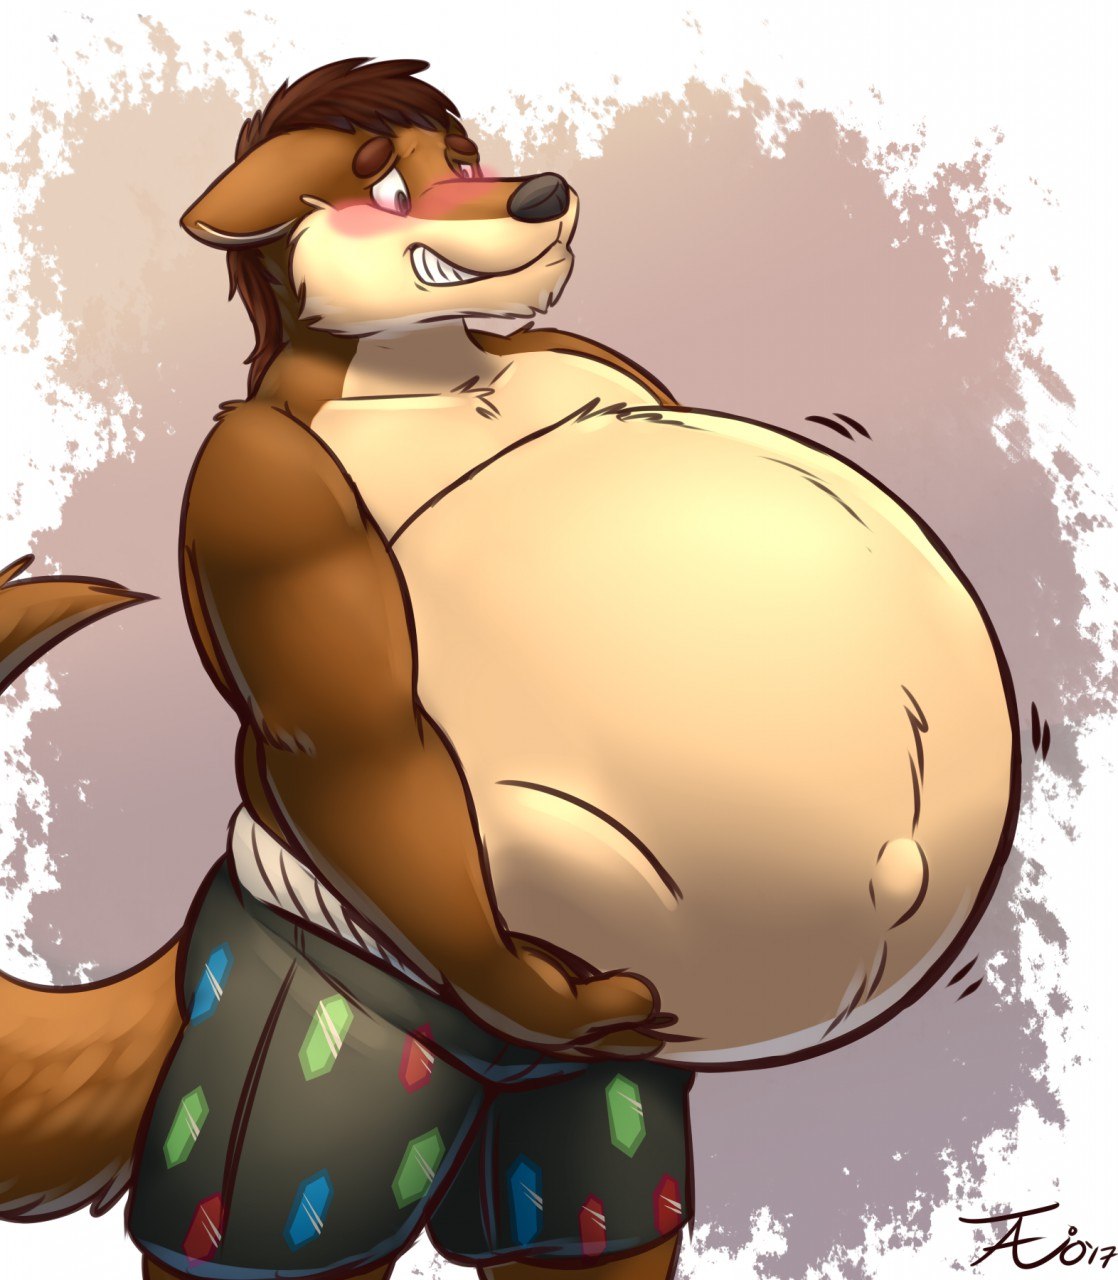 Furry big belly